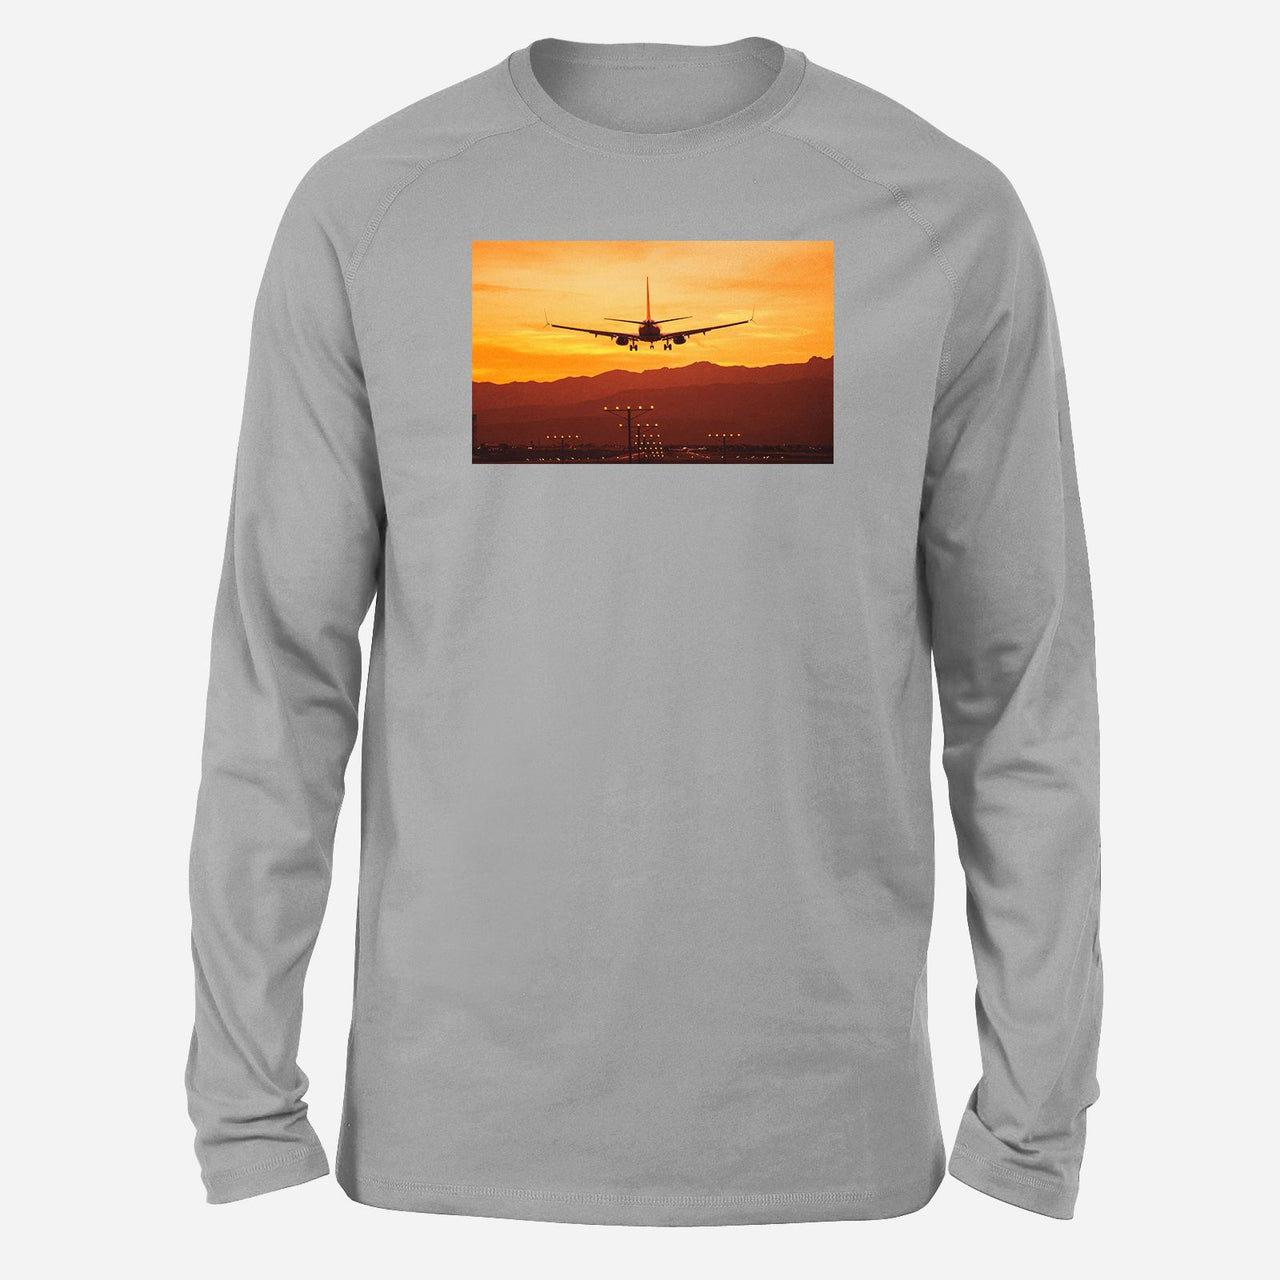 Landing Aircraft During Sunset Designed Long-Sleeve T-Shirts